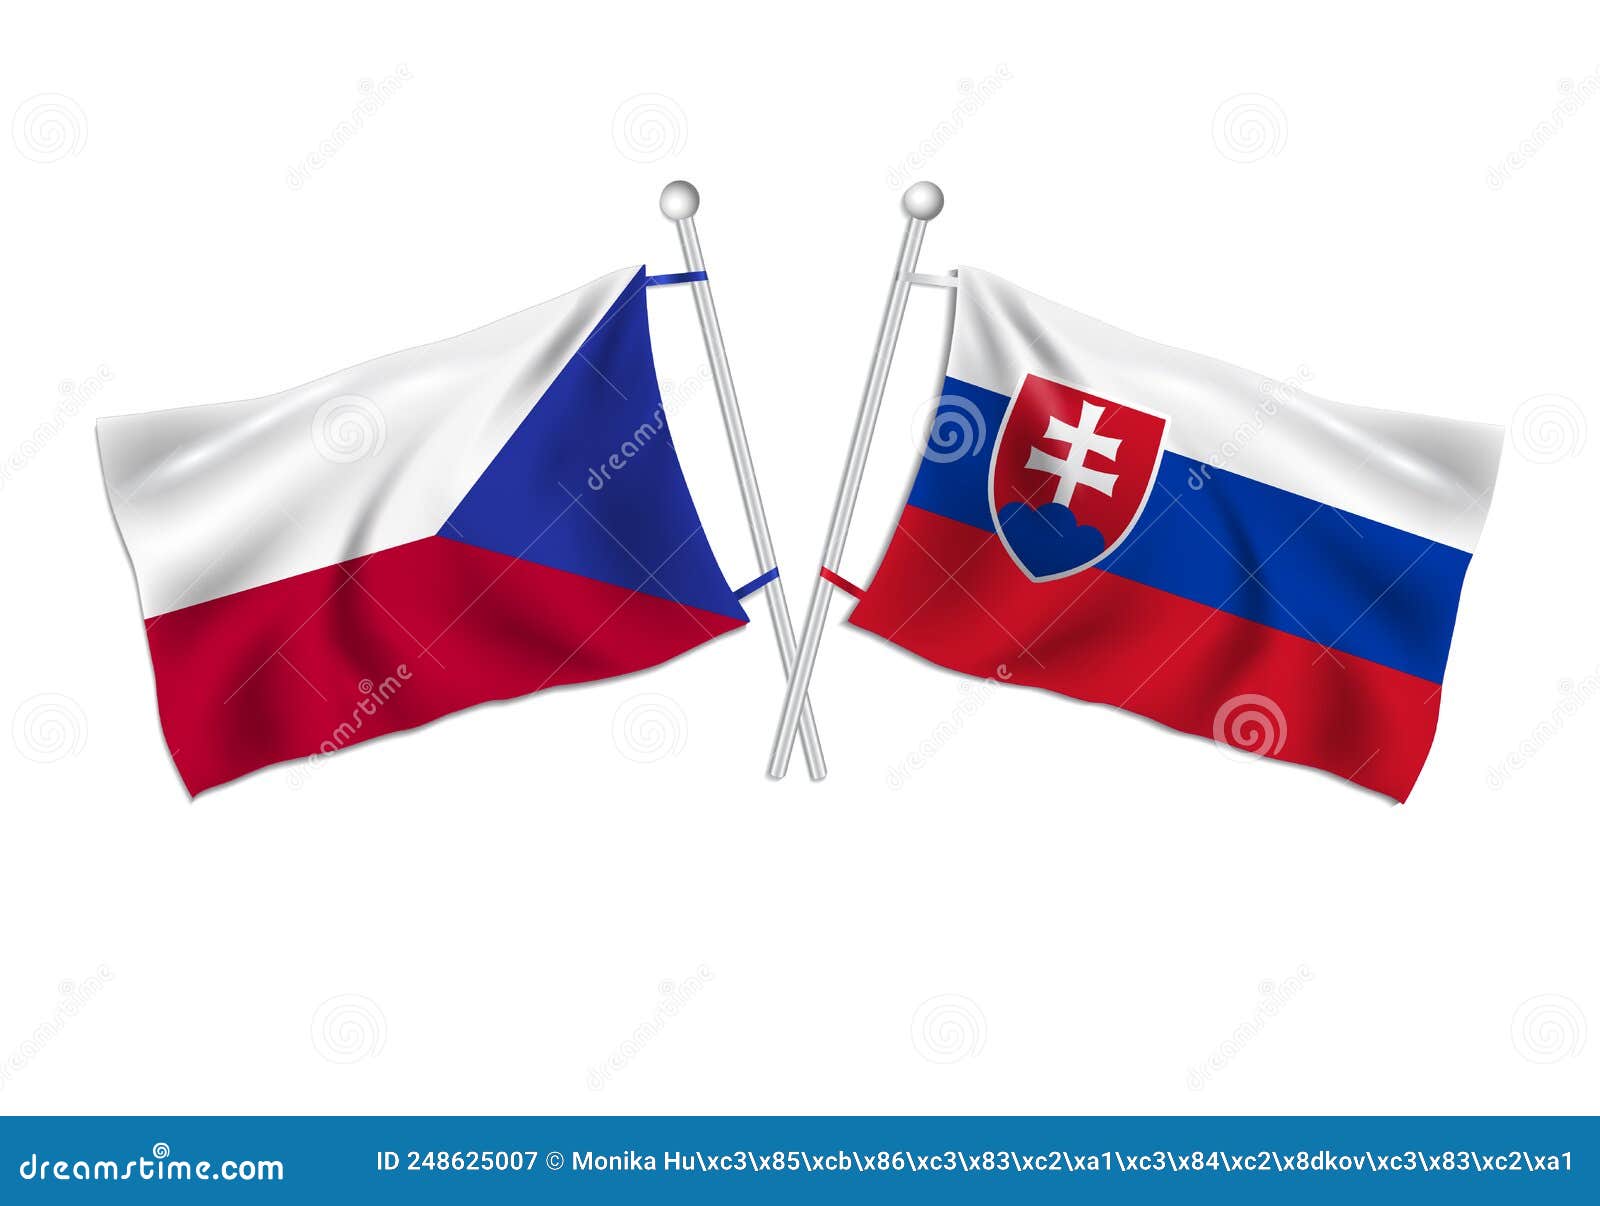 Flagge Tschechien Fahne Tschechien